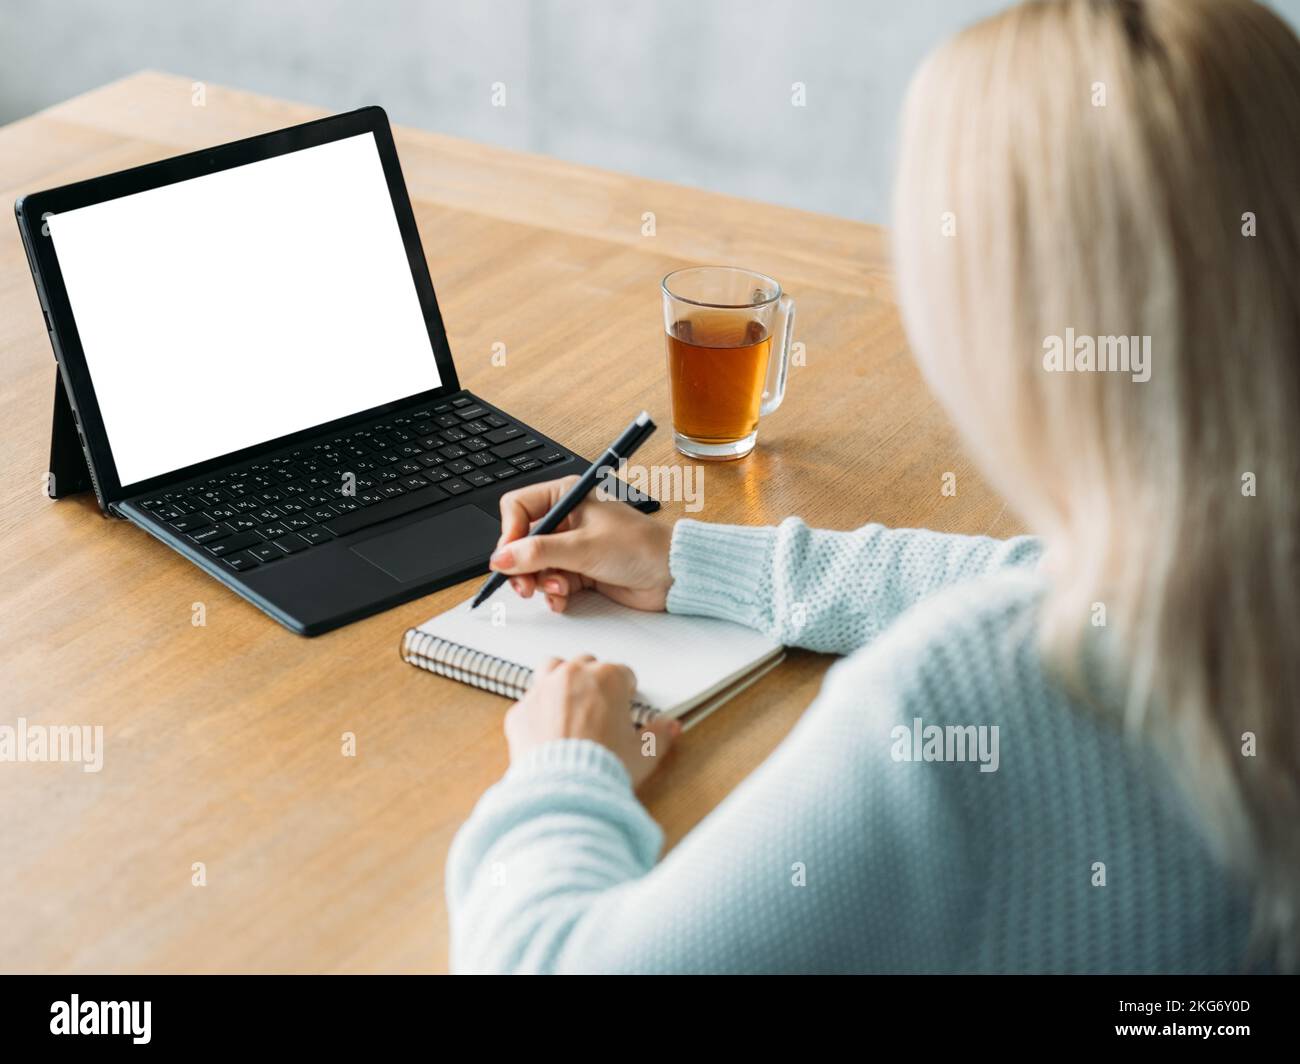 online education writing woman computer mockup Stock Photo